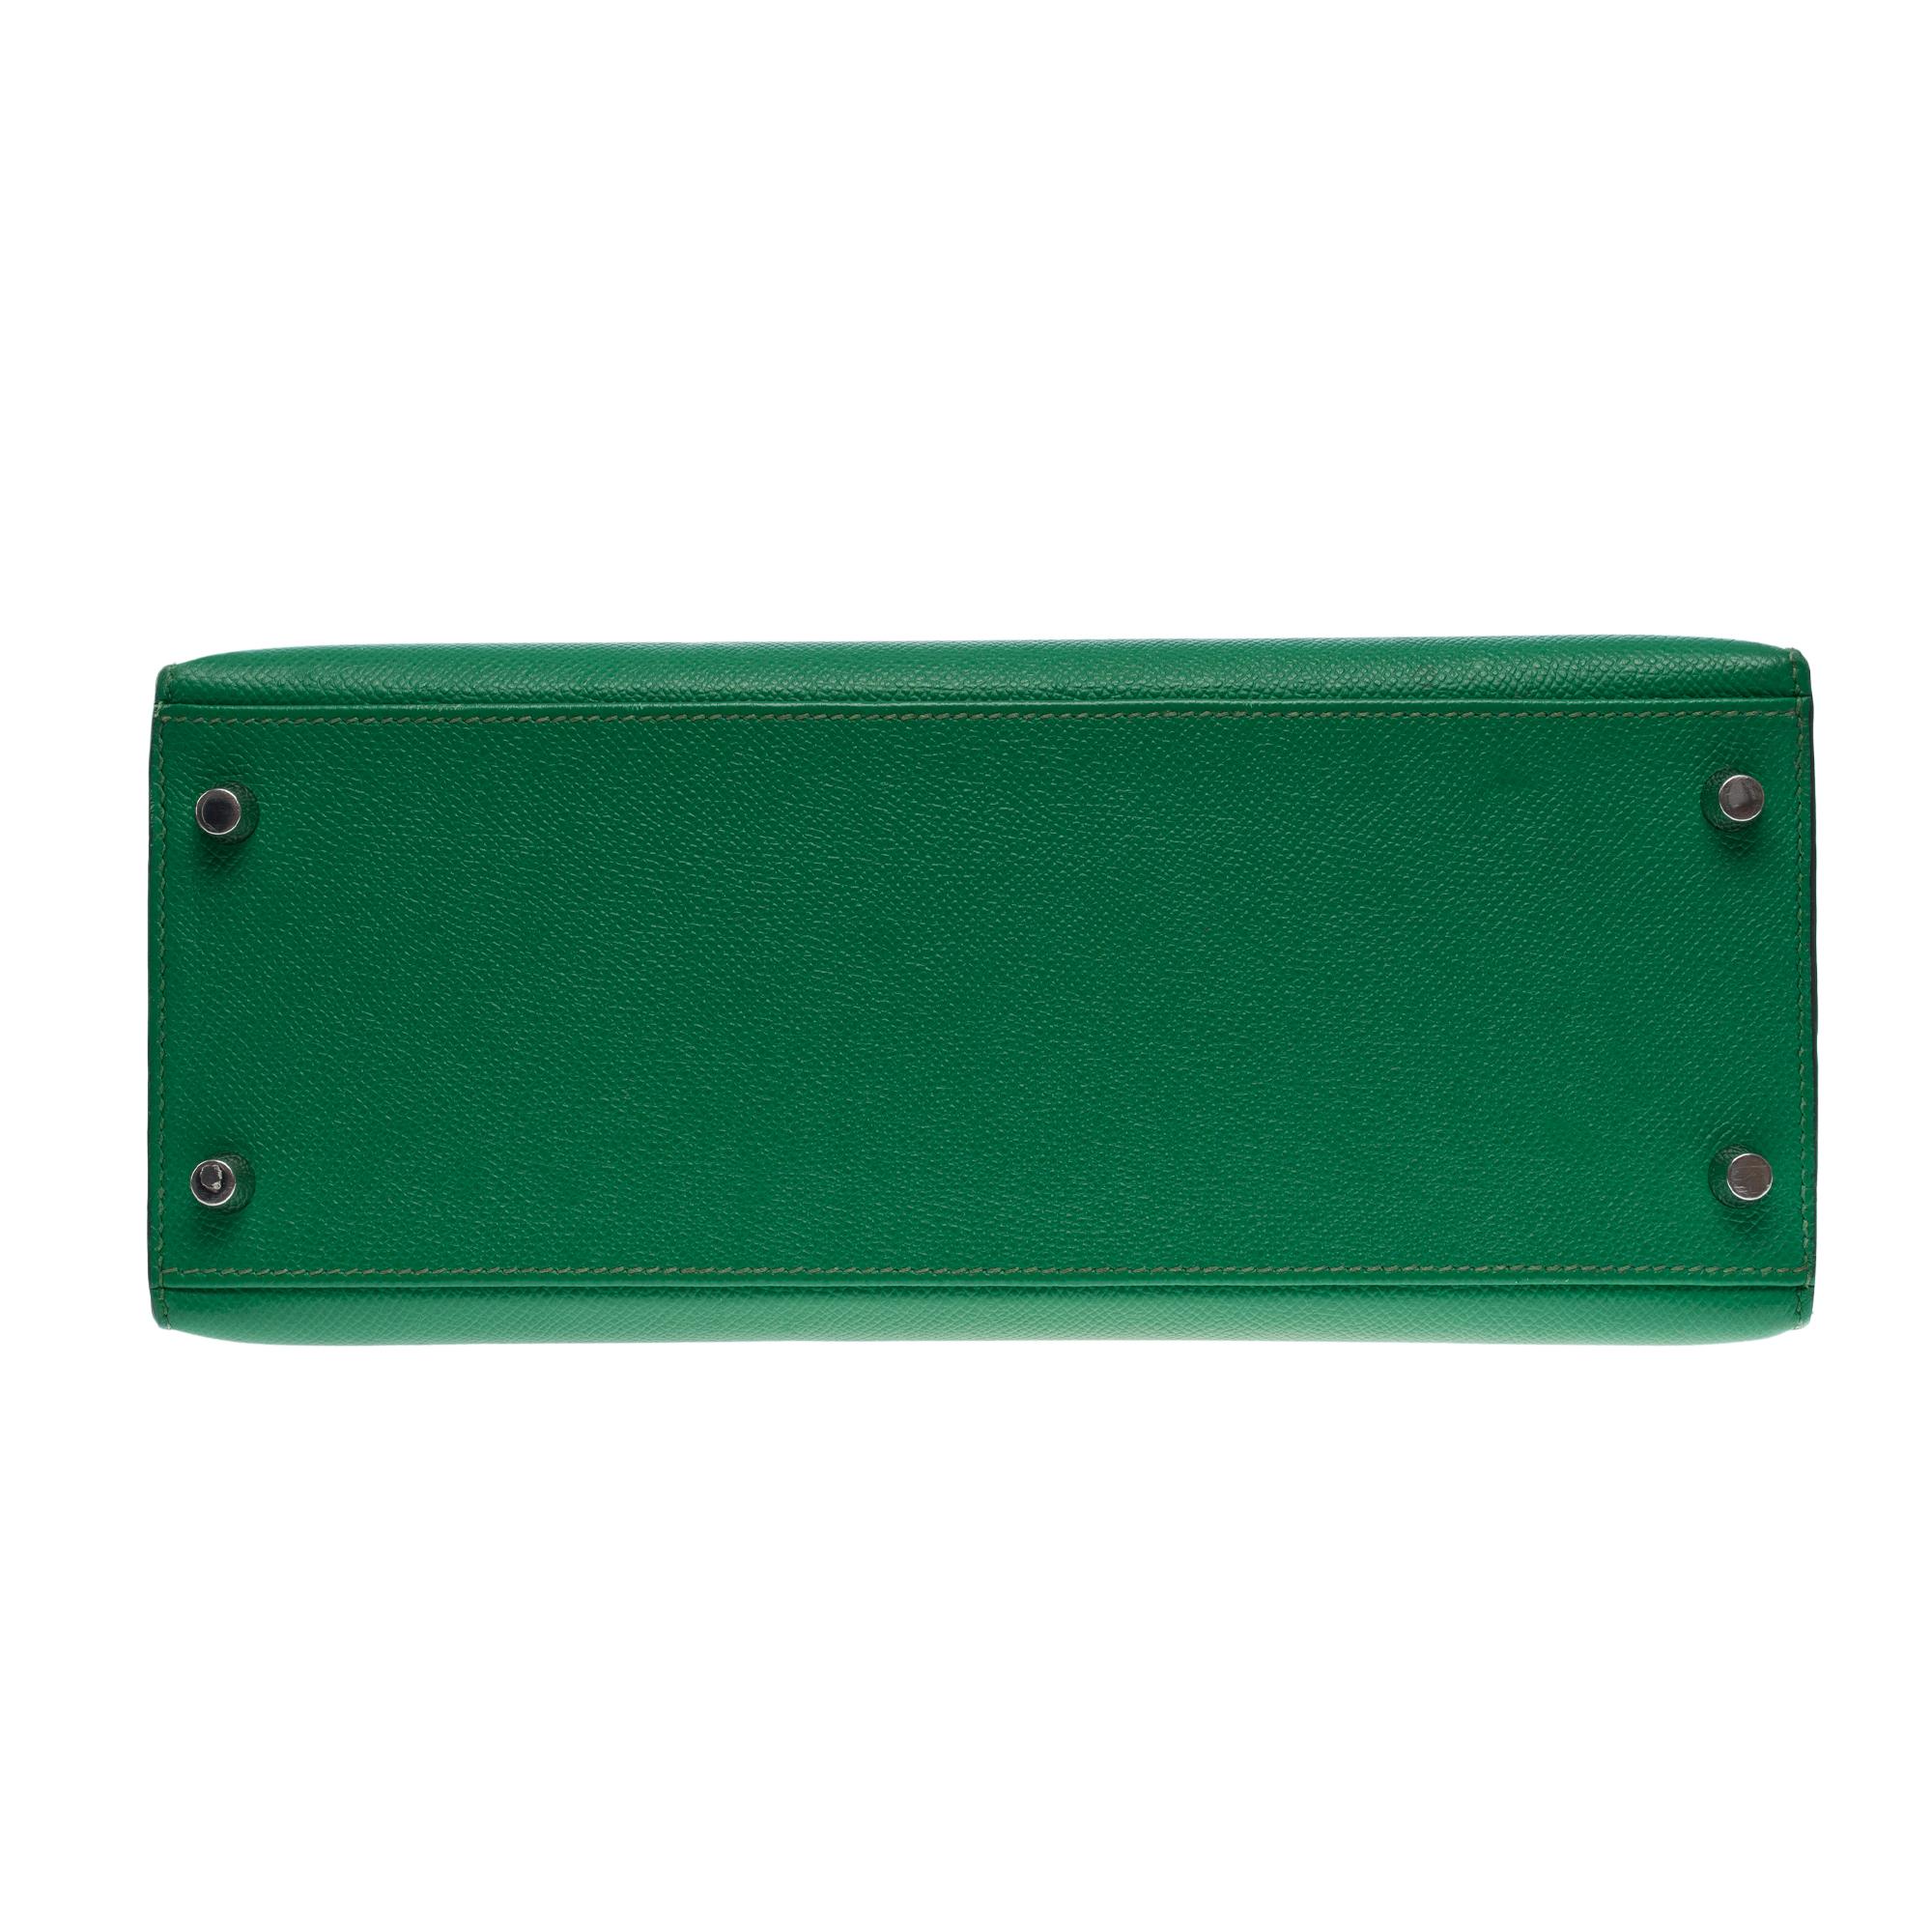 Bright Hermès Kelly 28 sellier handbag strap in Green Cactus Epsom leather, SHW 5